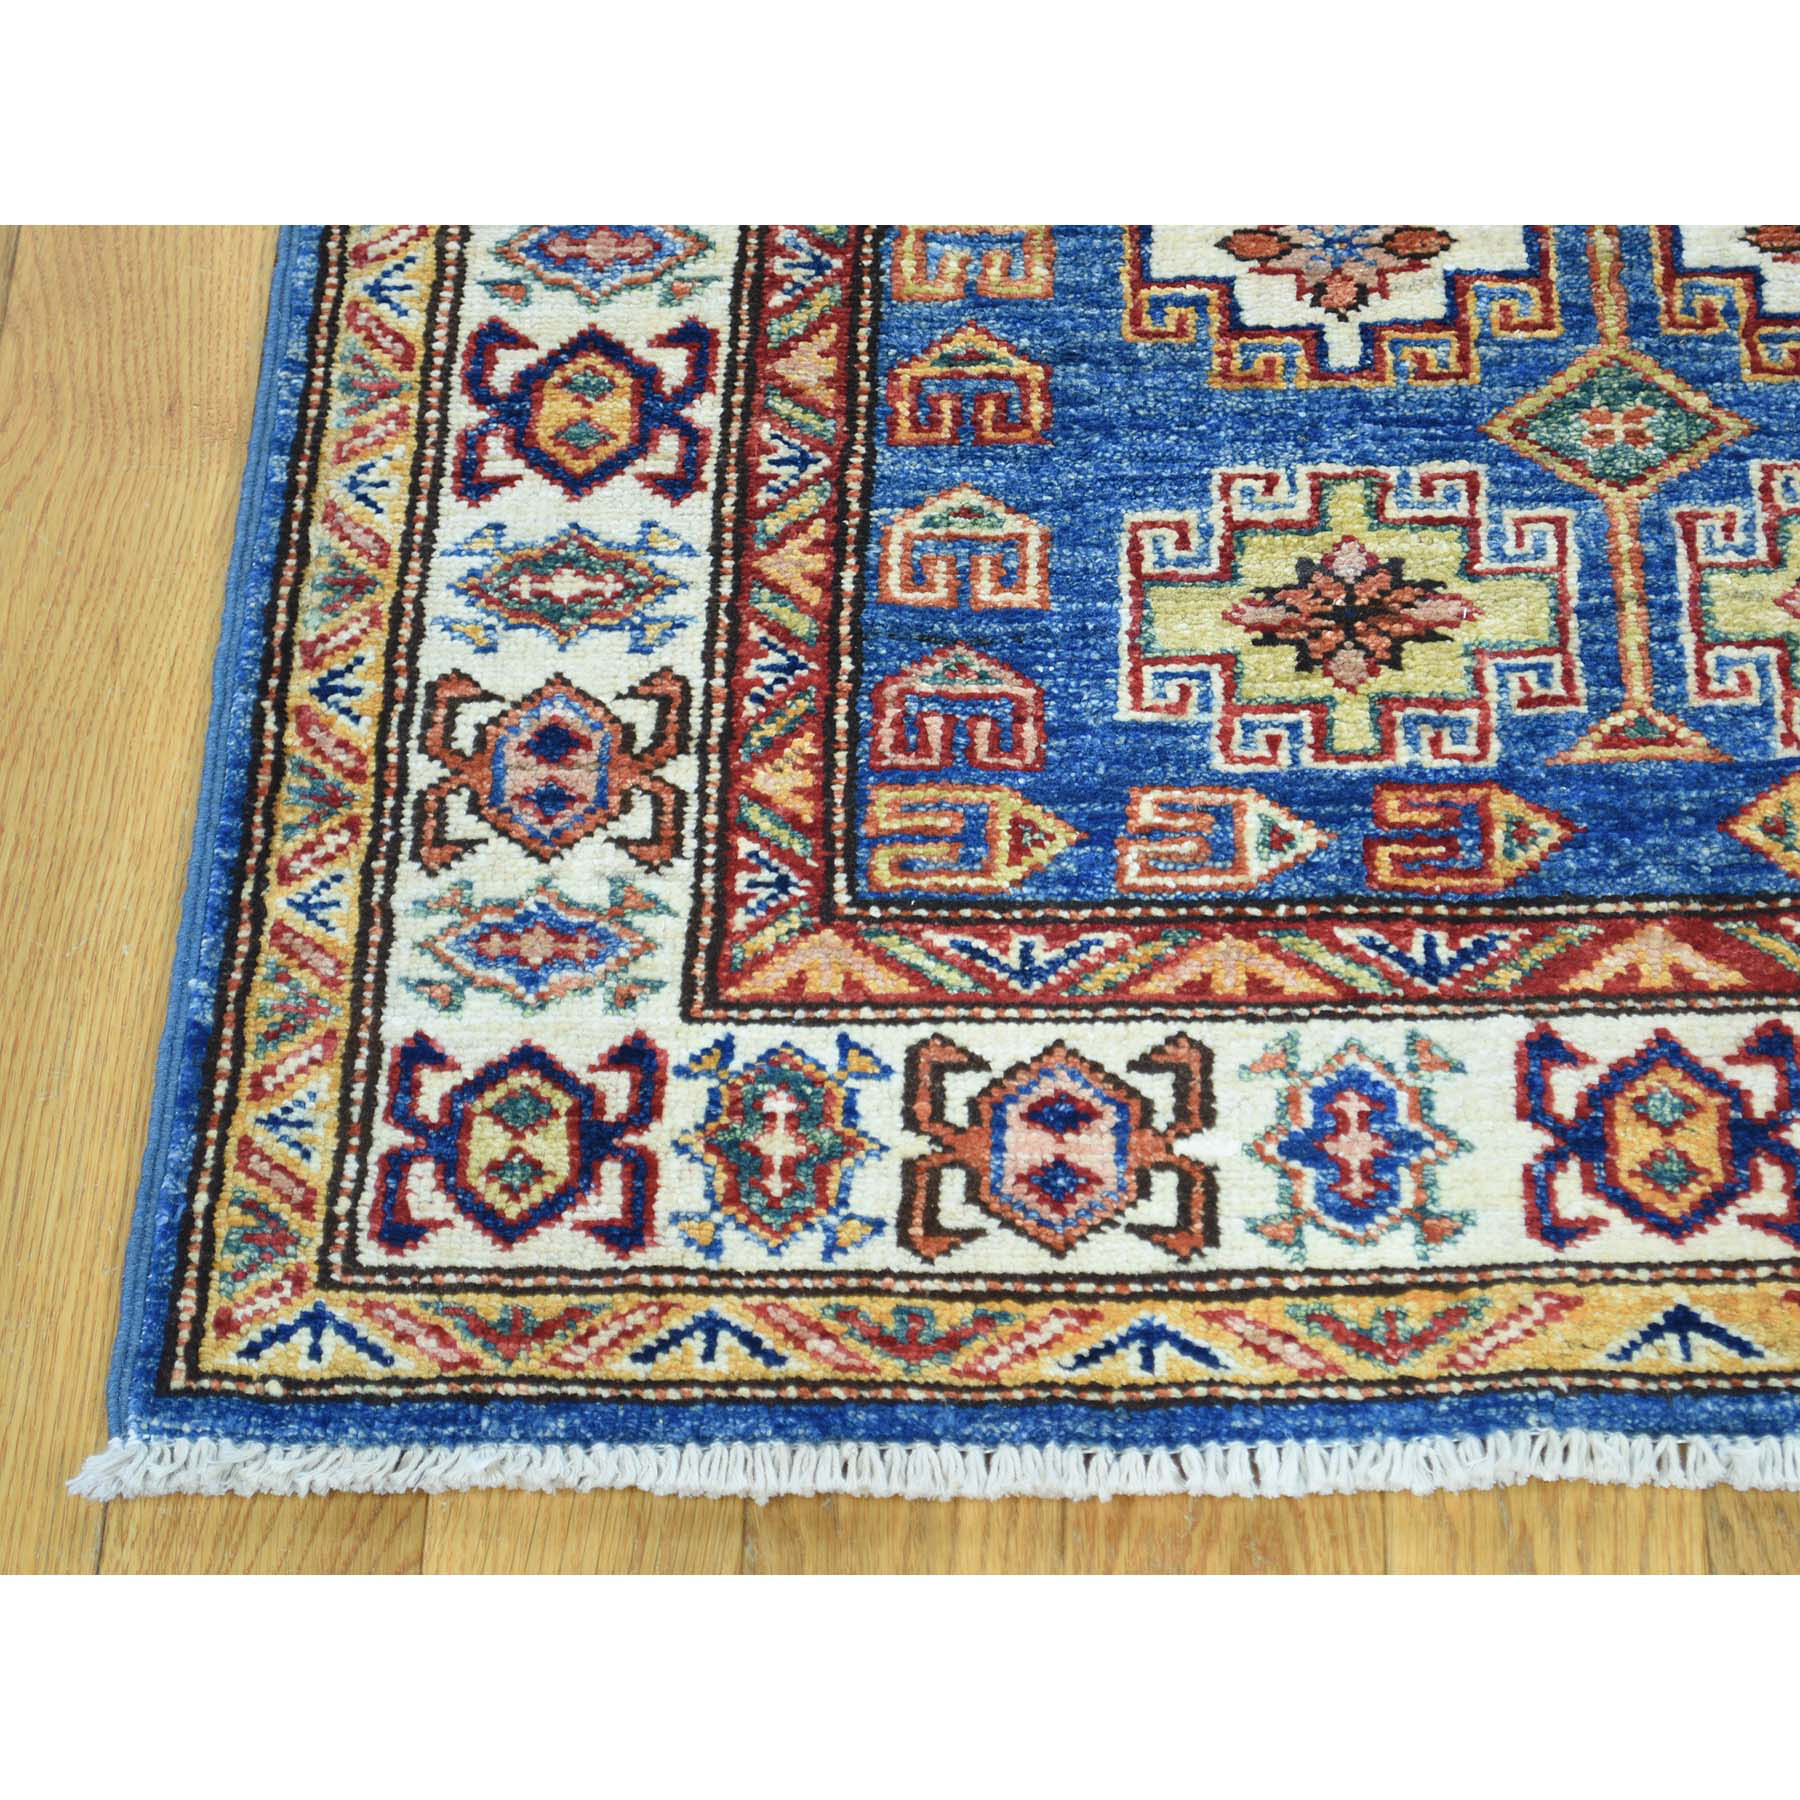 2-7 x4-5  Hand-Knotted Denim Blue Super Kazak Tribal Design Oriental Rug 